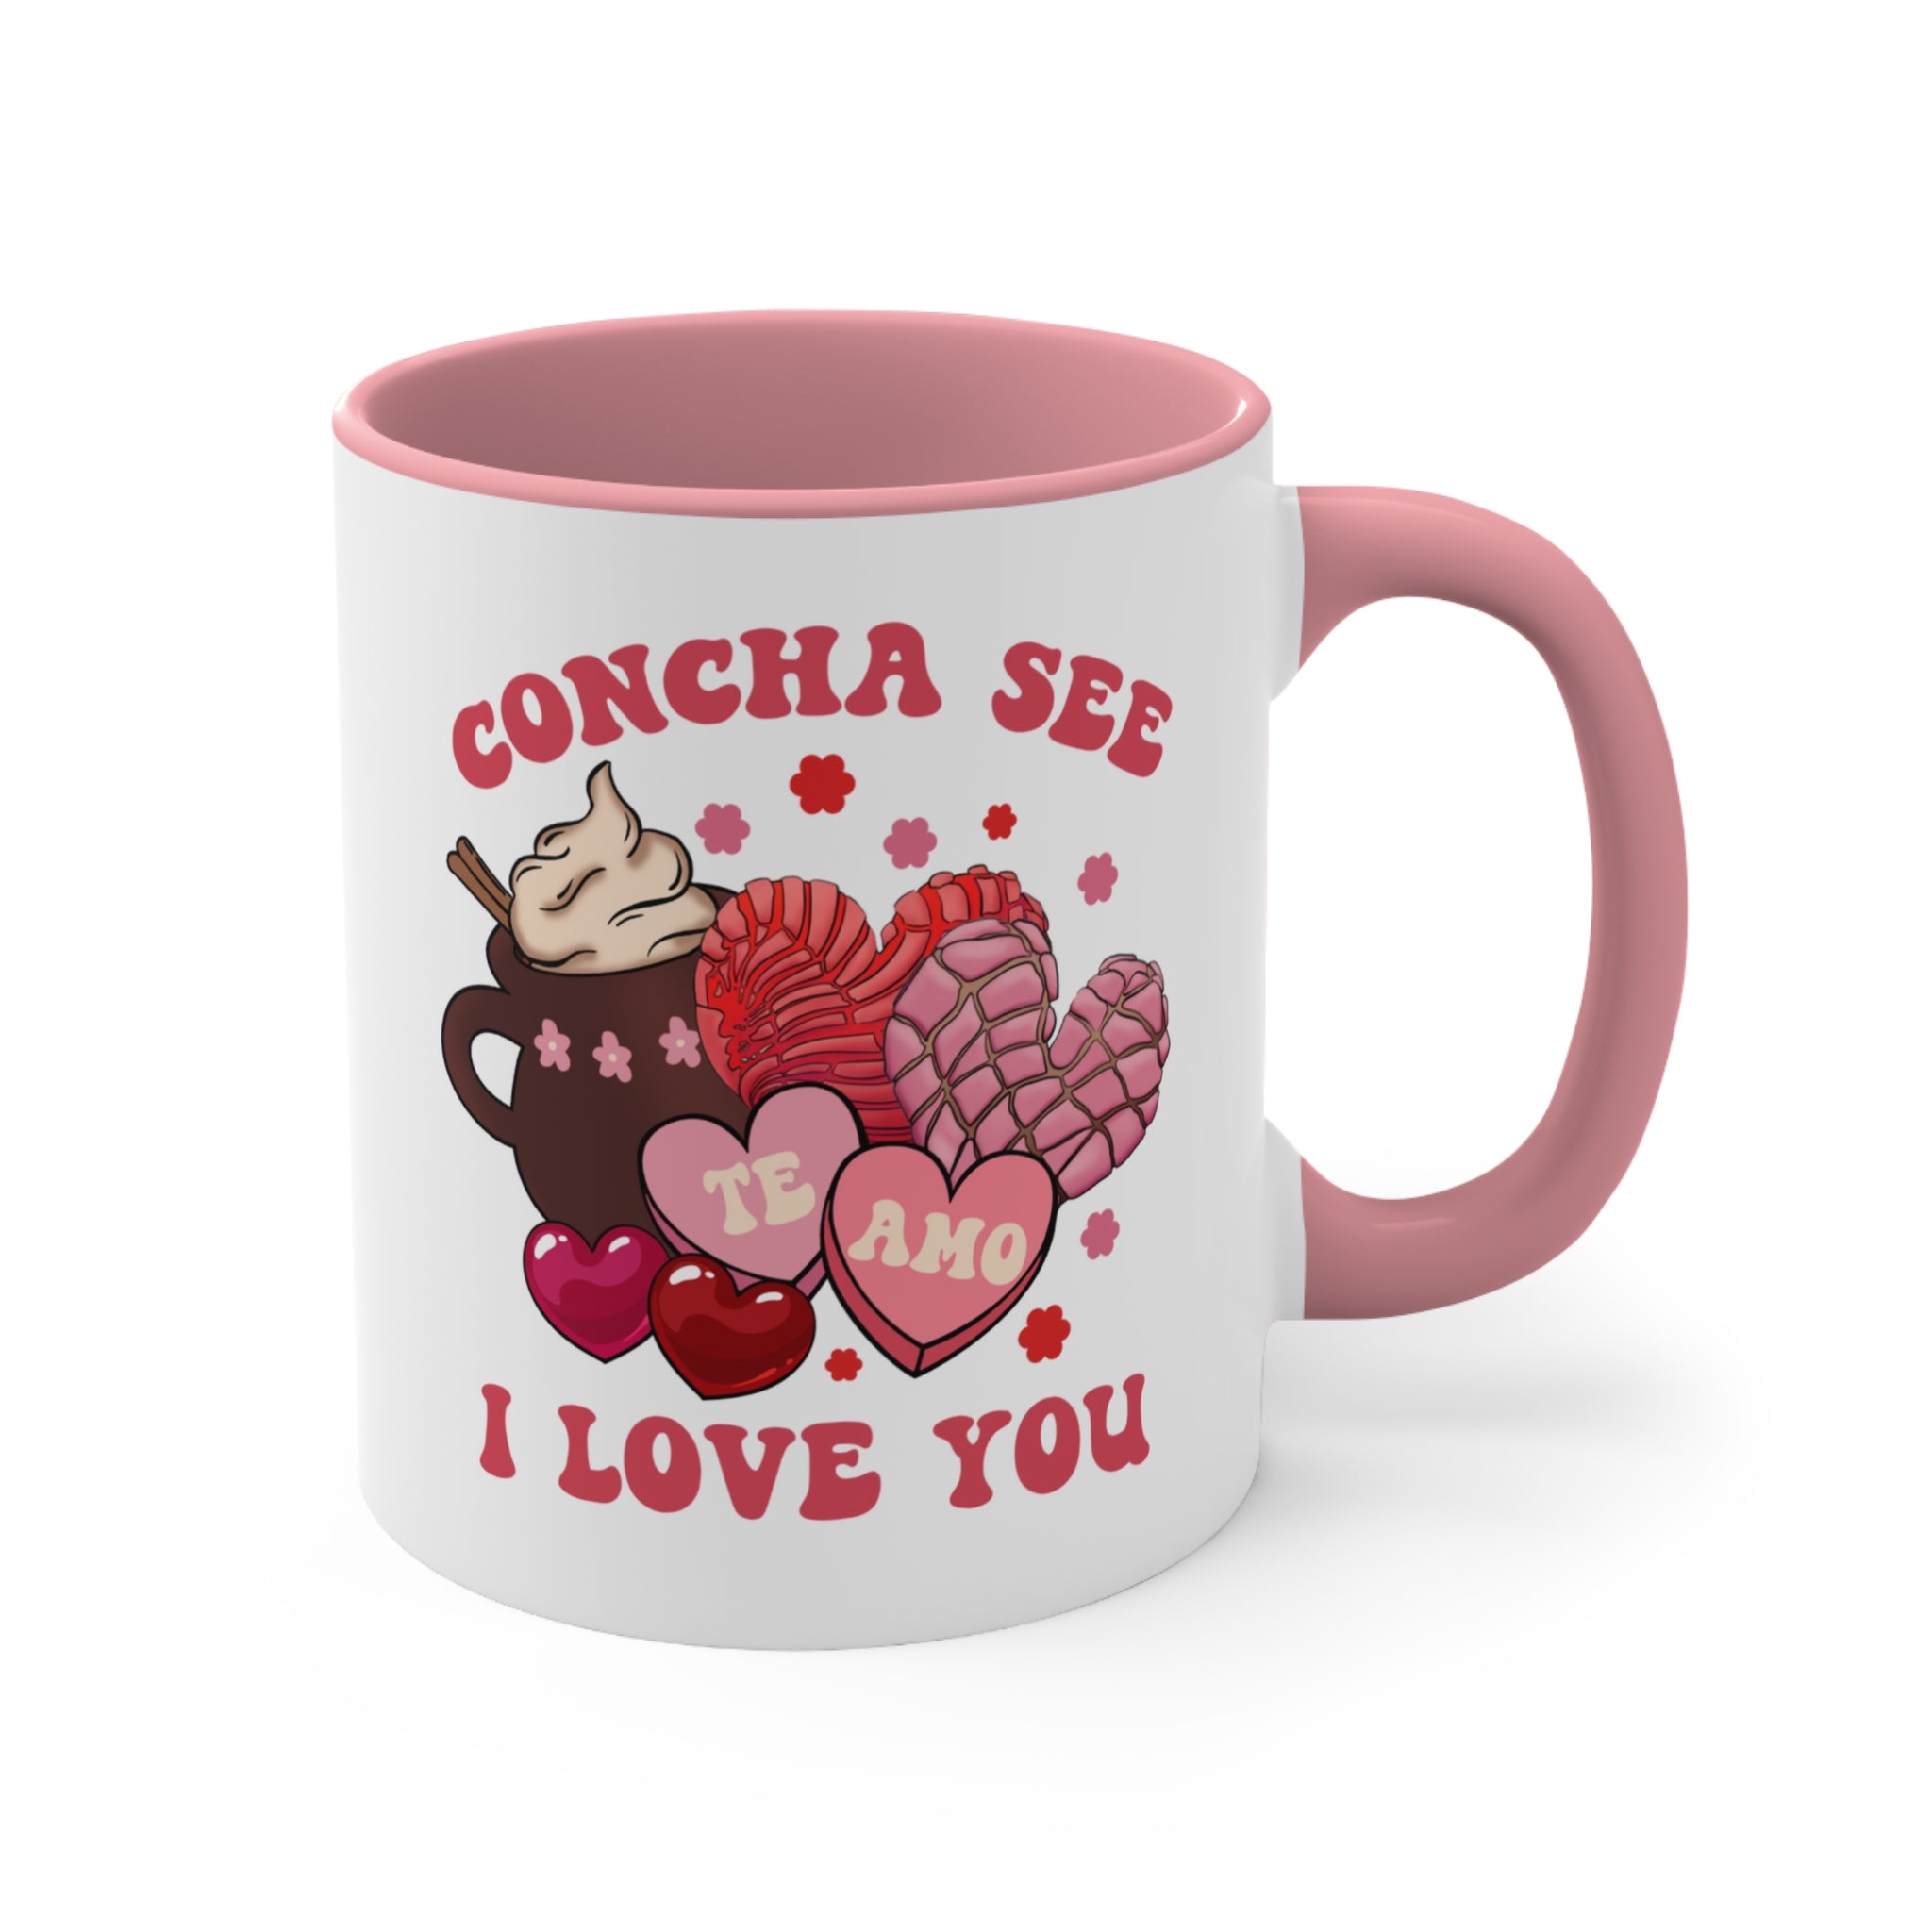 Concha Cup